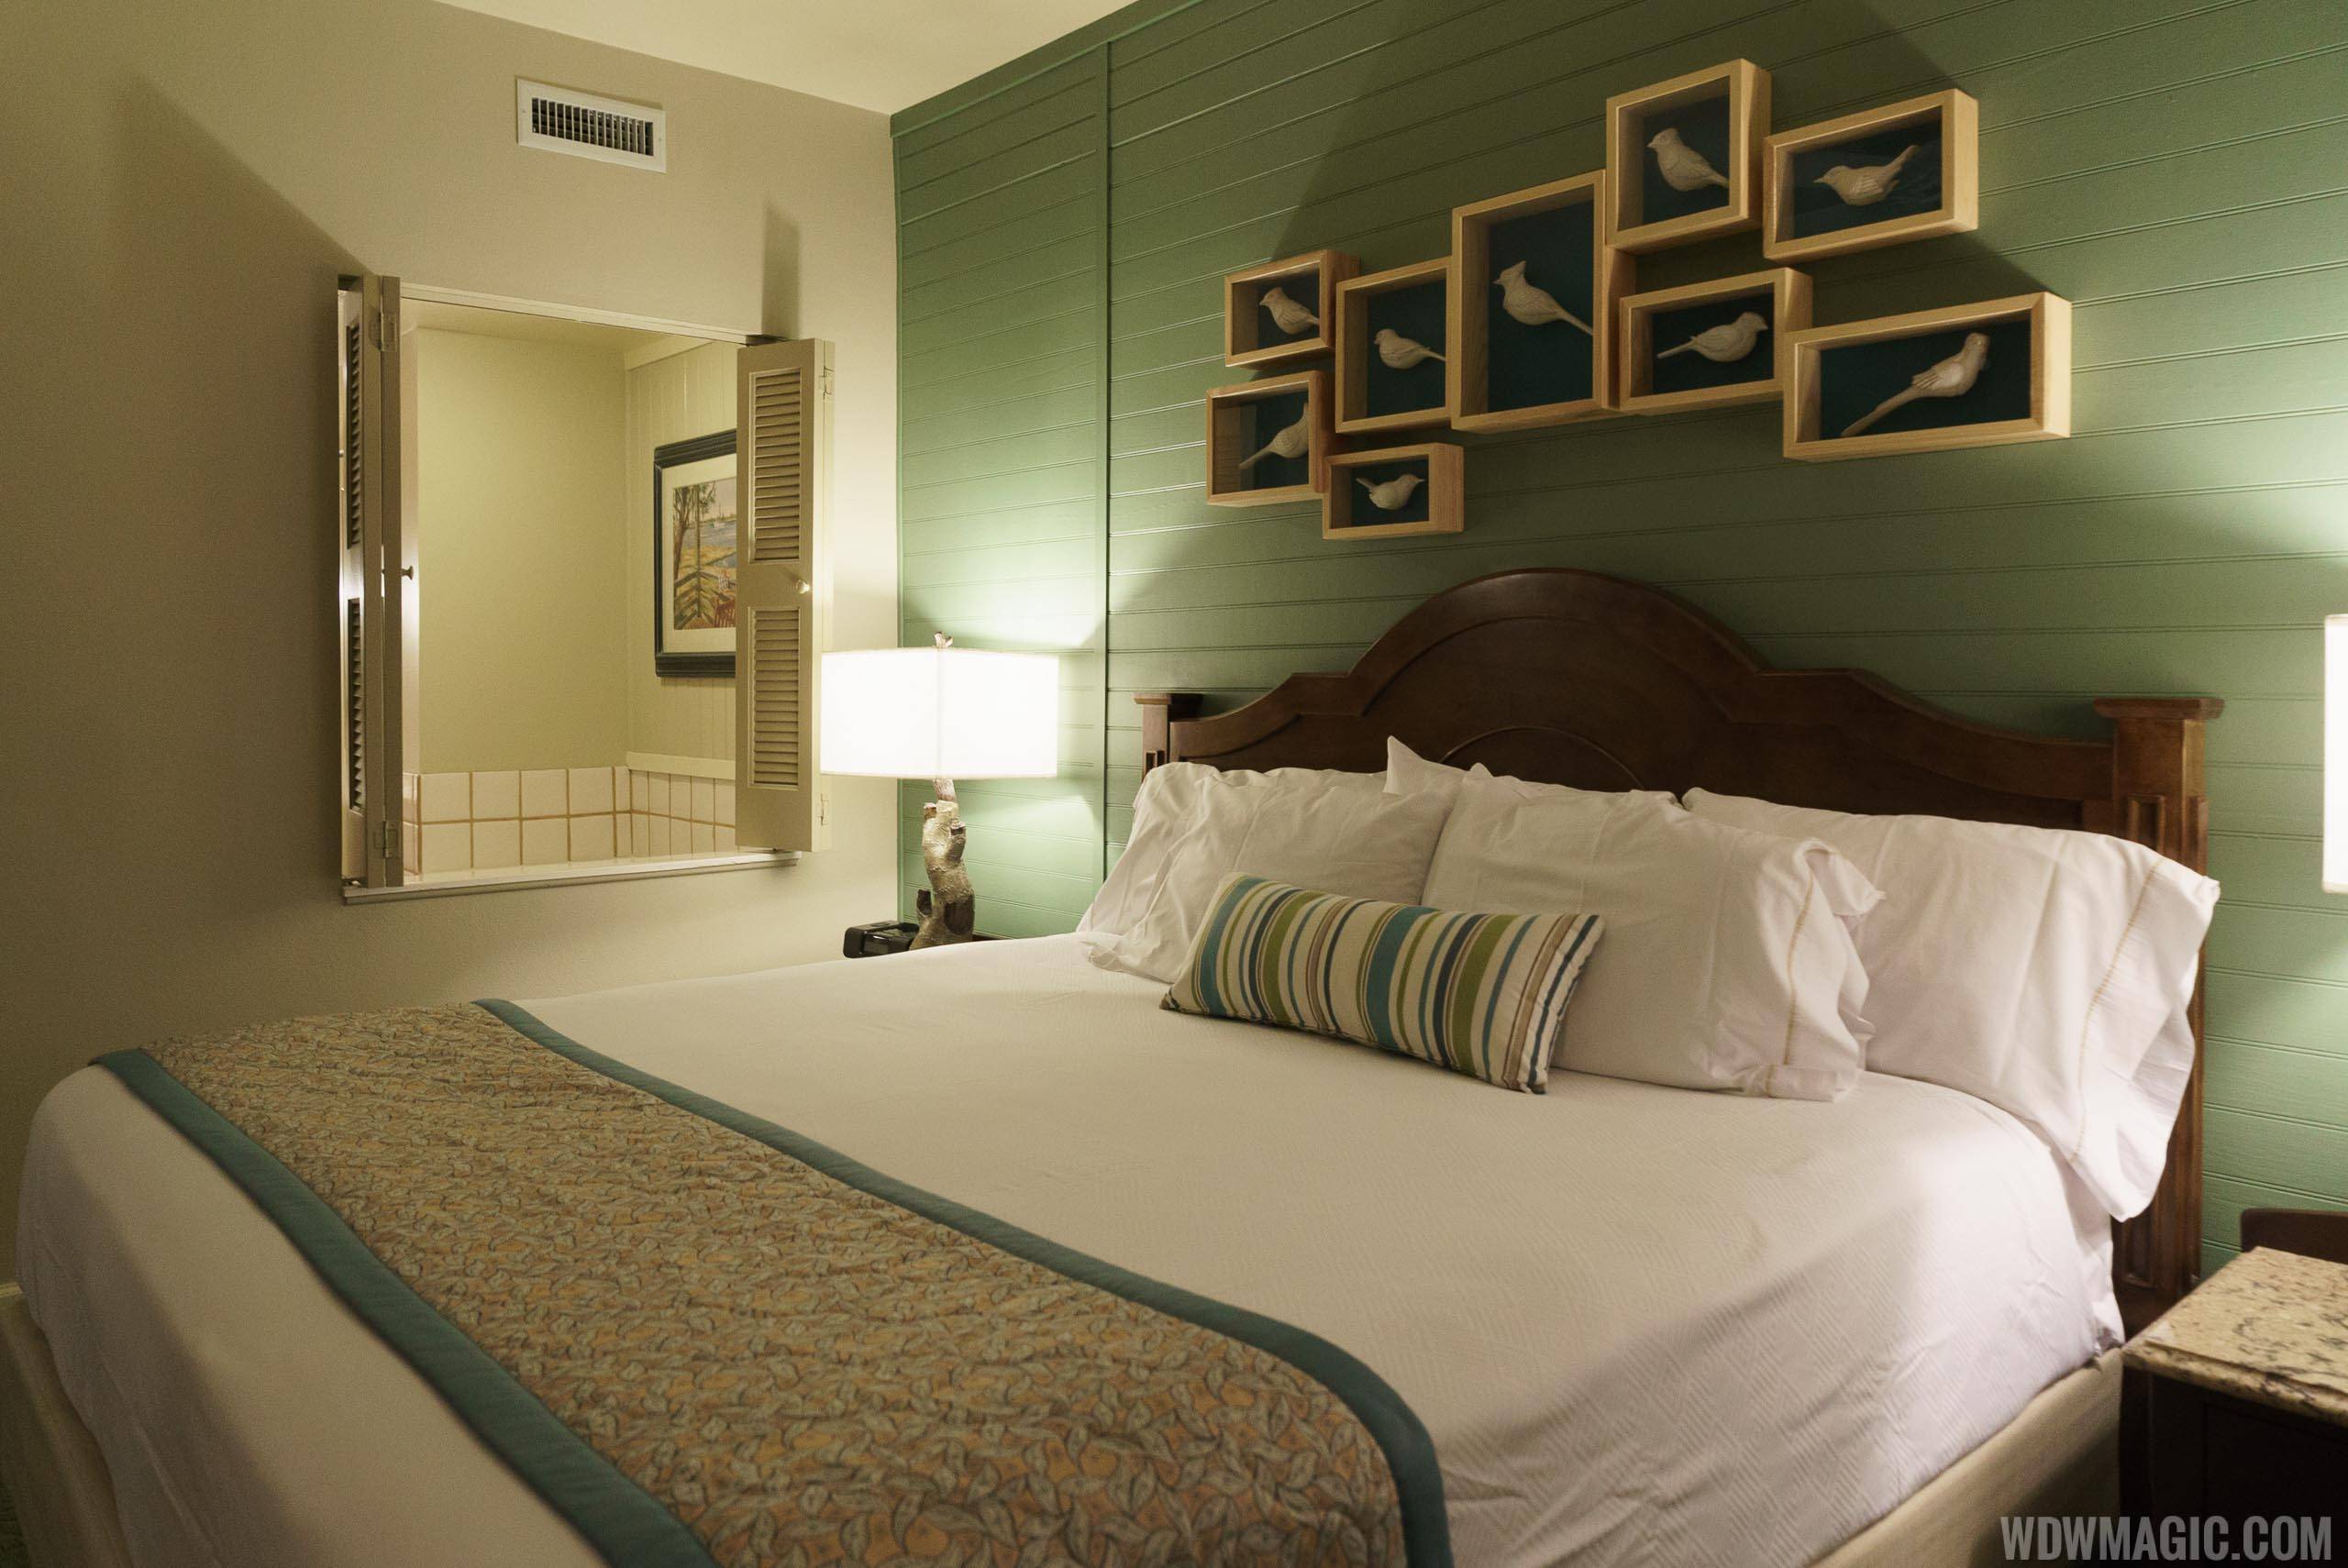 Disney's Hilton Head Island Resort - Guest Room